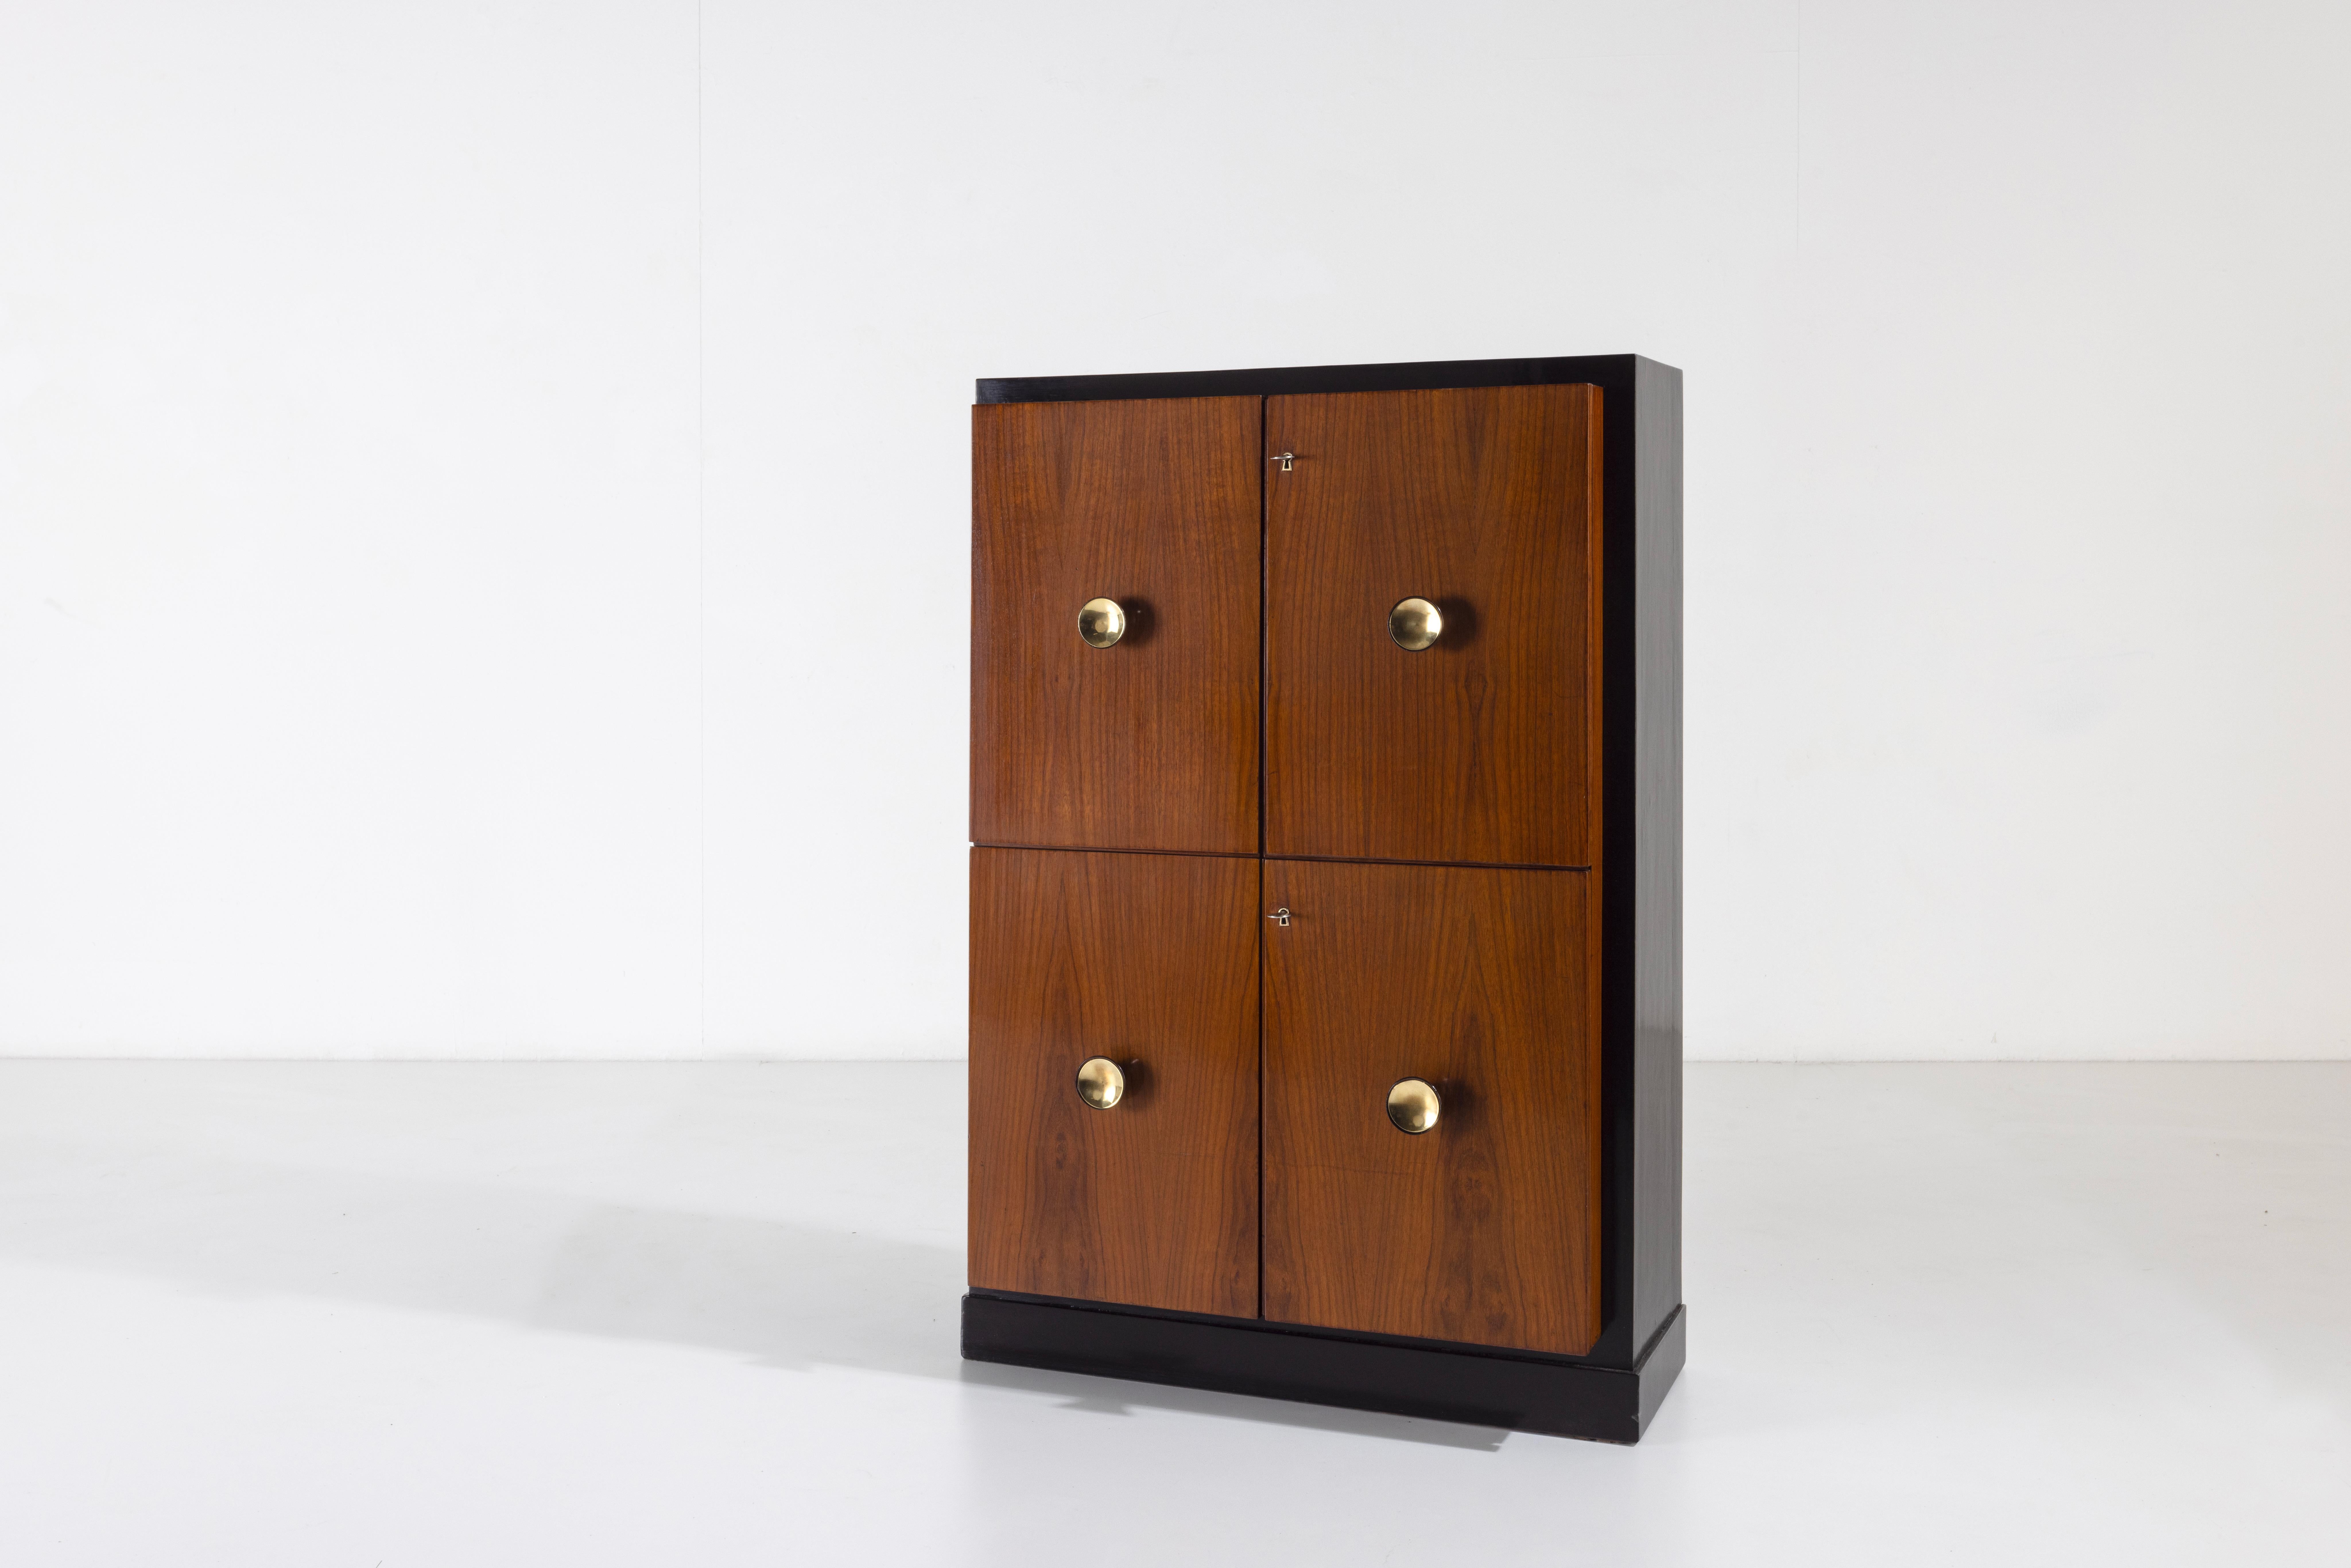 Osvaldo Borsani Elegant wood storage unit and brass handles Italian design 50s In Good Condition For Sale In Milan, IT